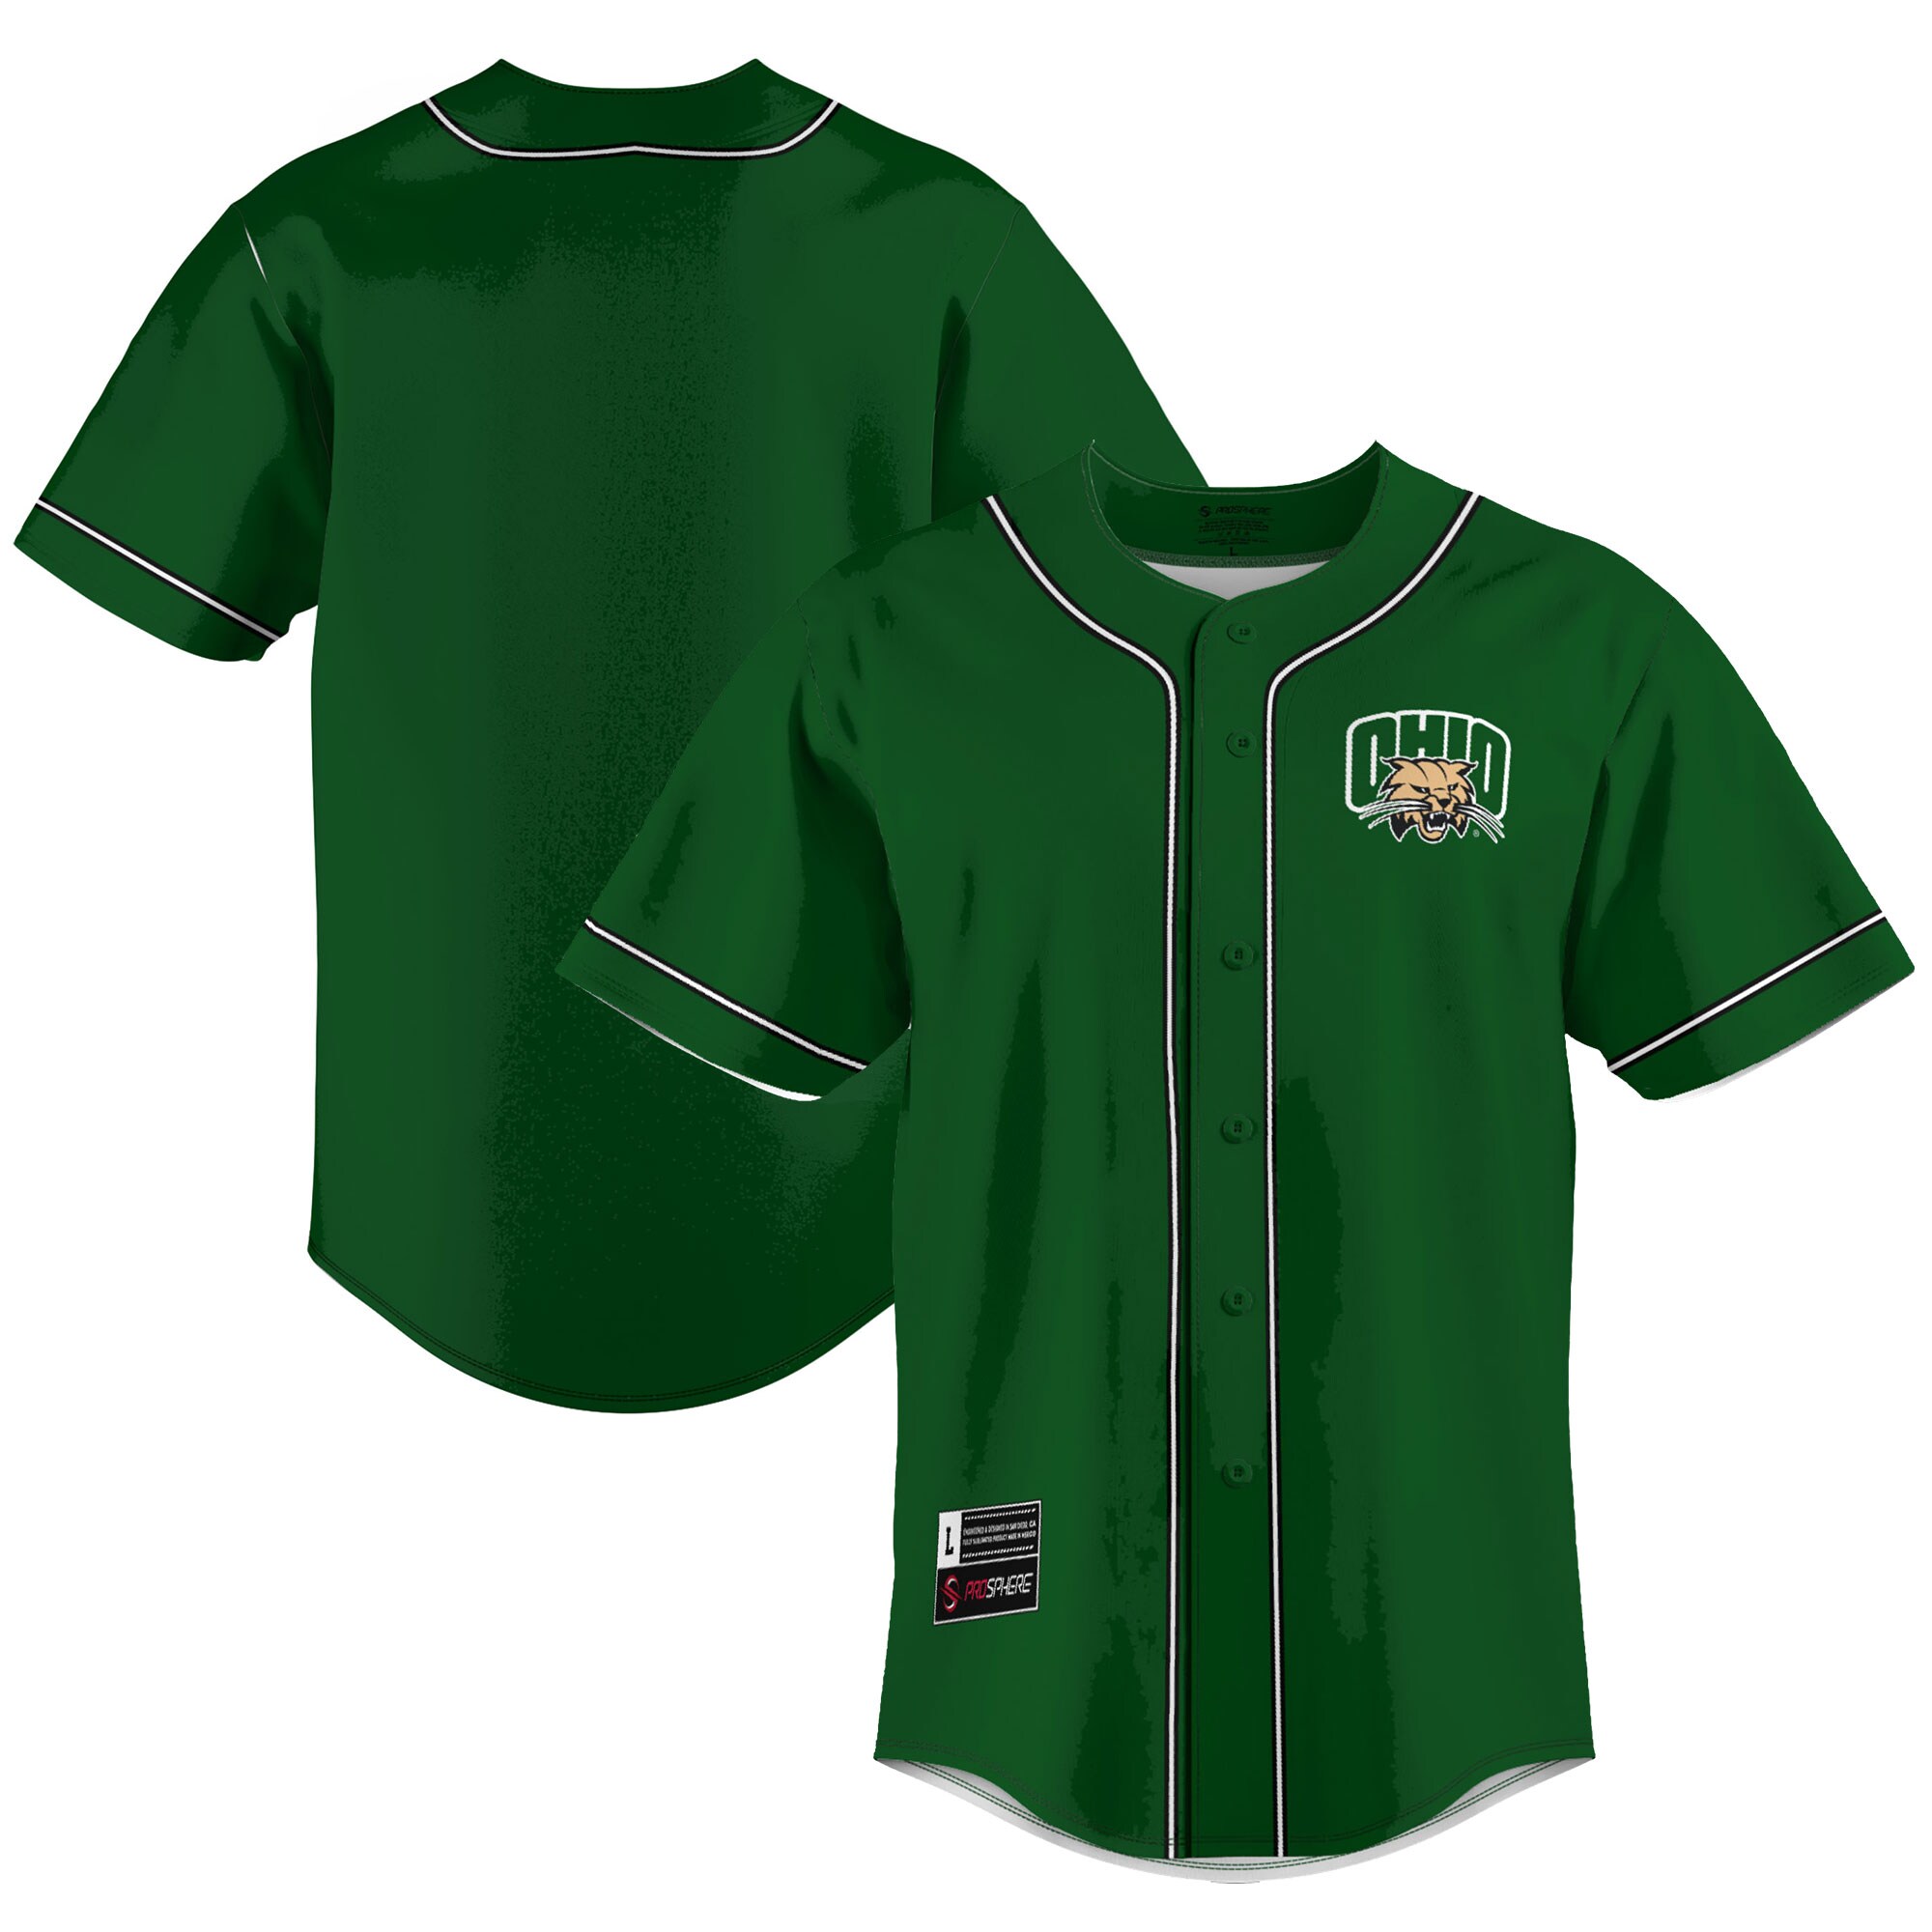 Ohio Bobcats Baseball Jersey - Green For Youth Women Men